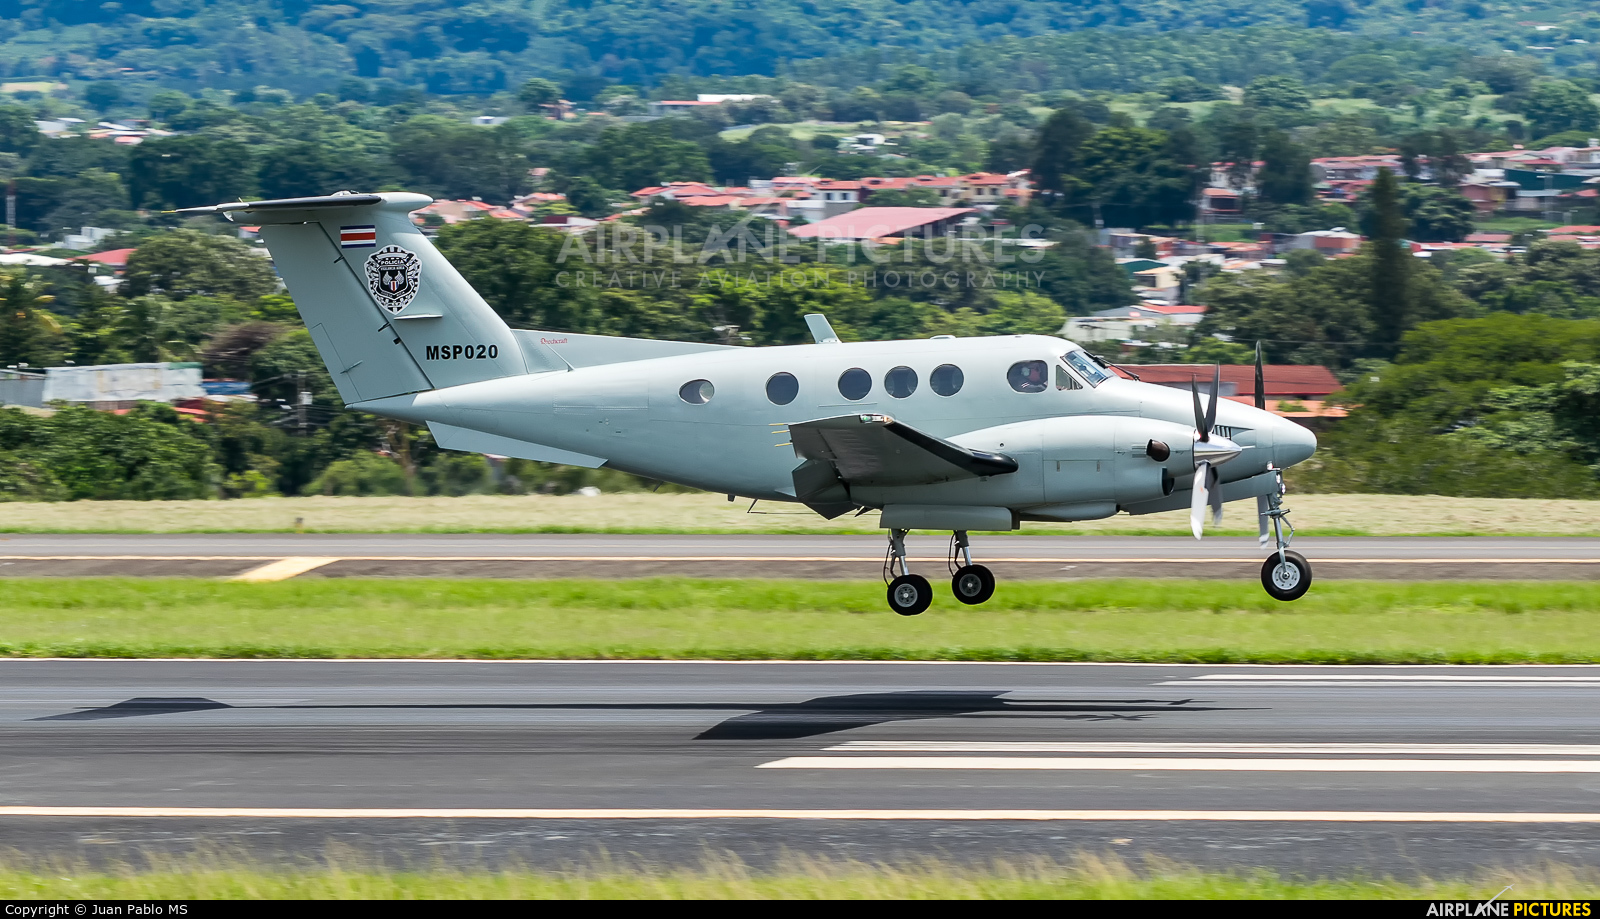 Costa Rica - Ministry of Public Security MSP020 aircraft at San Jose - Juan Santamaría Intl